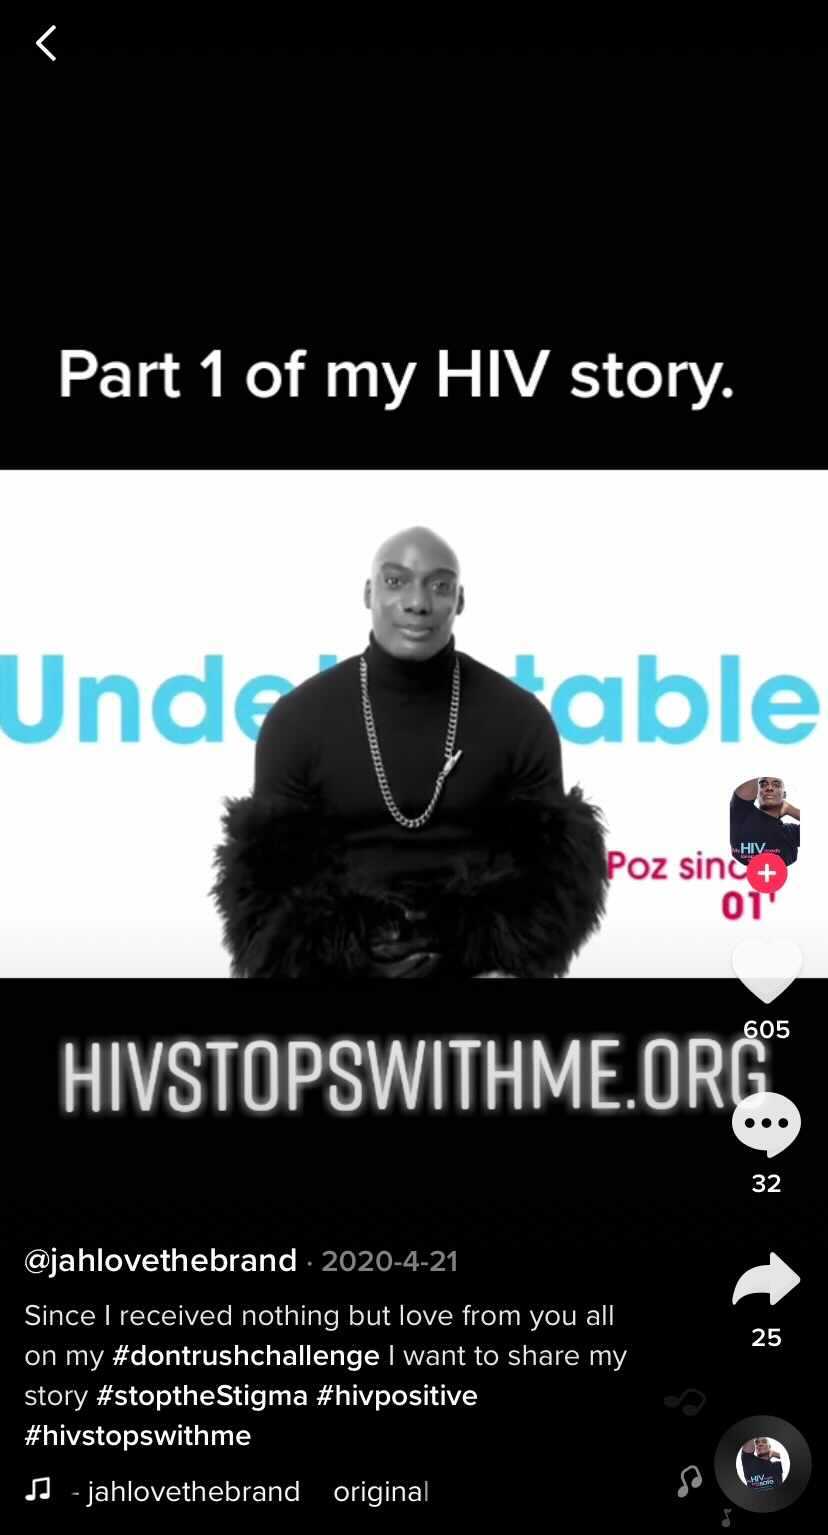 tiktok user jah love telling his HIV story